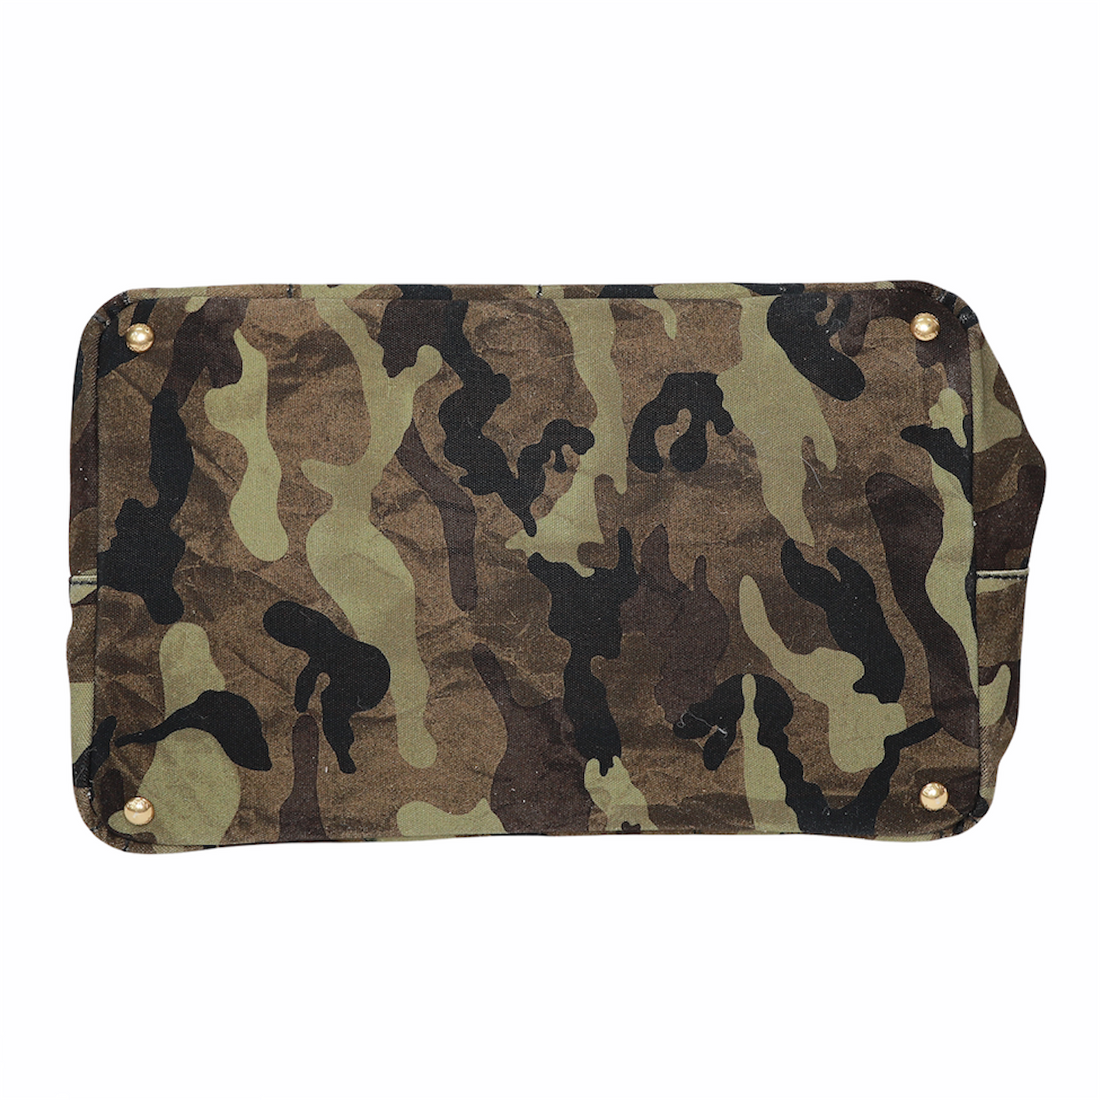 Prada Camouflage "Canapa" Tasche